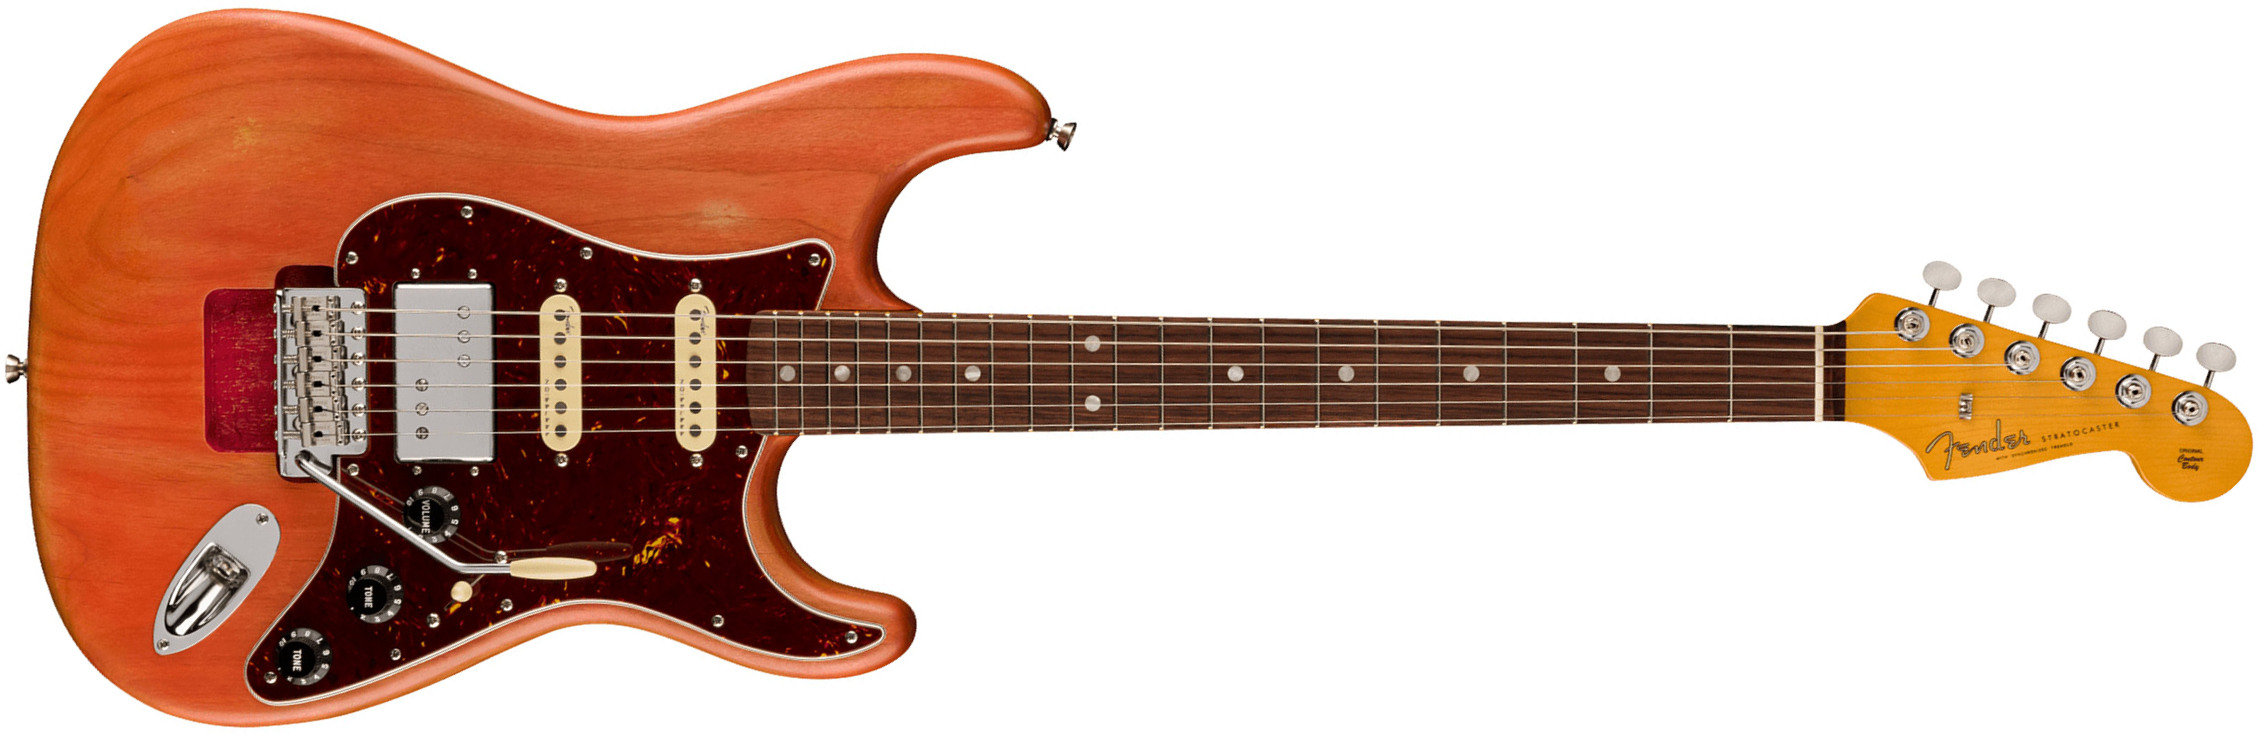 Fender Michael Landau Strat Coma Stories Usa Signature Hss Trem Rw - Coma Red - Str shape electric guitar - Main picture